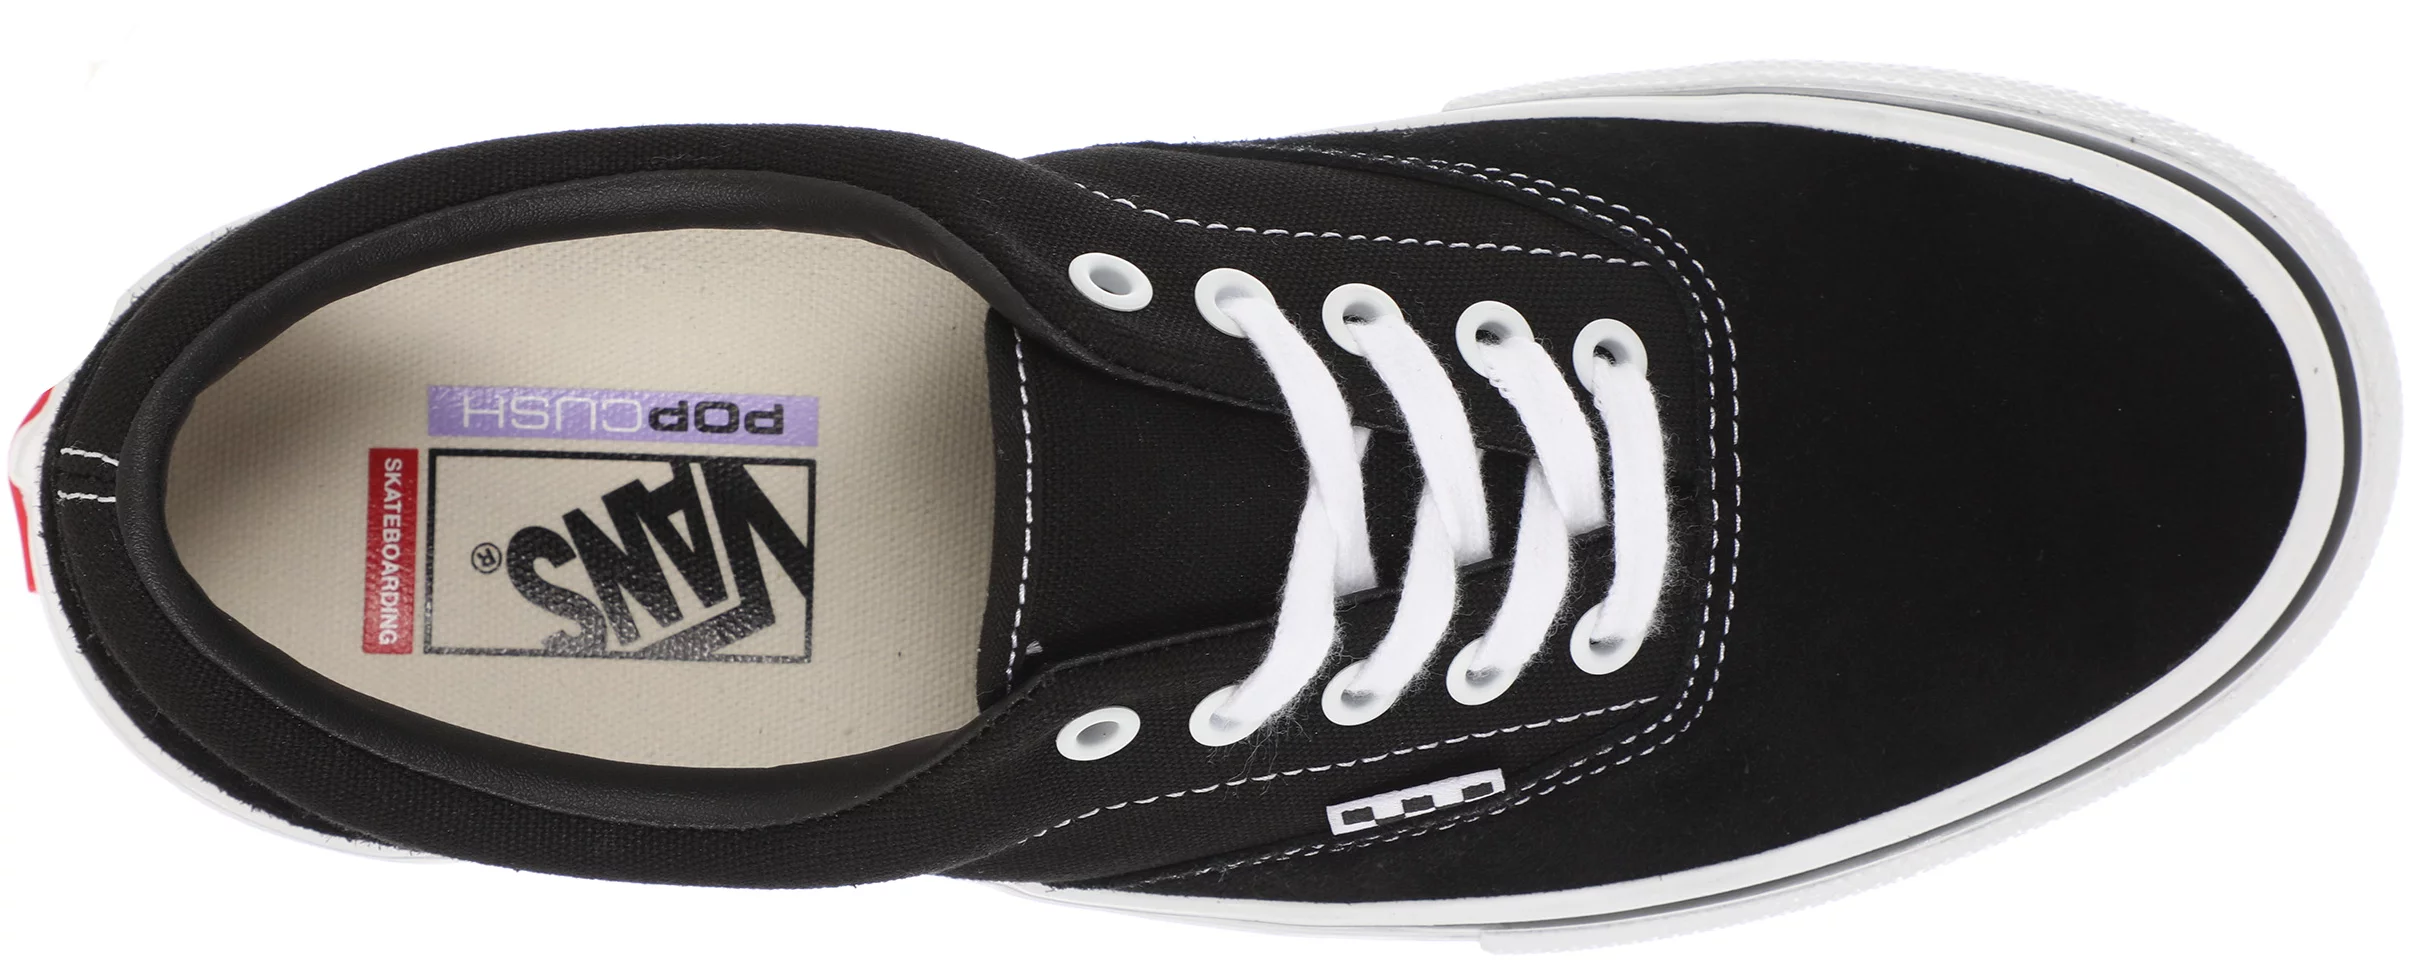 Draak niets filosofie Vans Skate Era Shoes - black/white - Free Shipping | Tactics